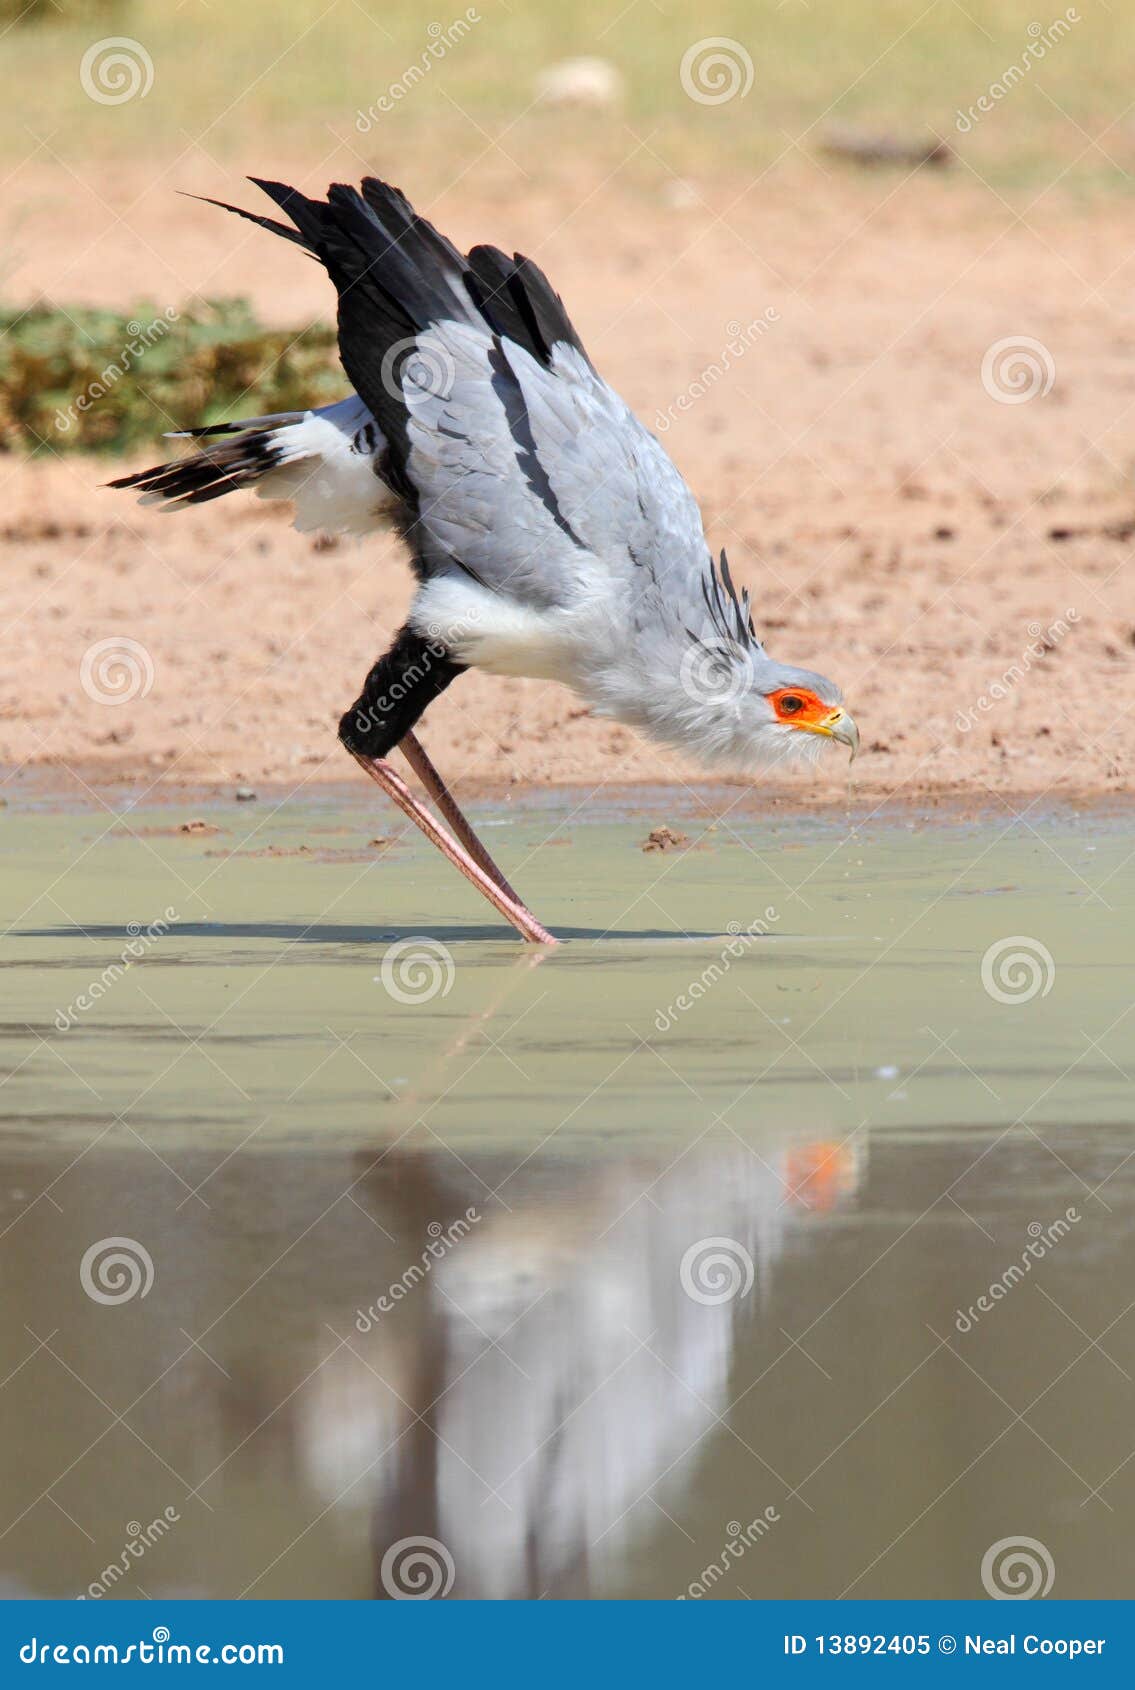 secretary bird reflection drinking water